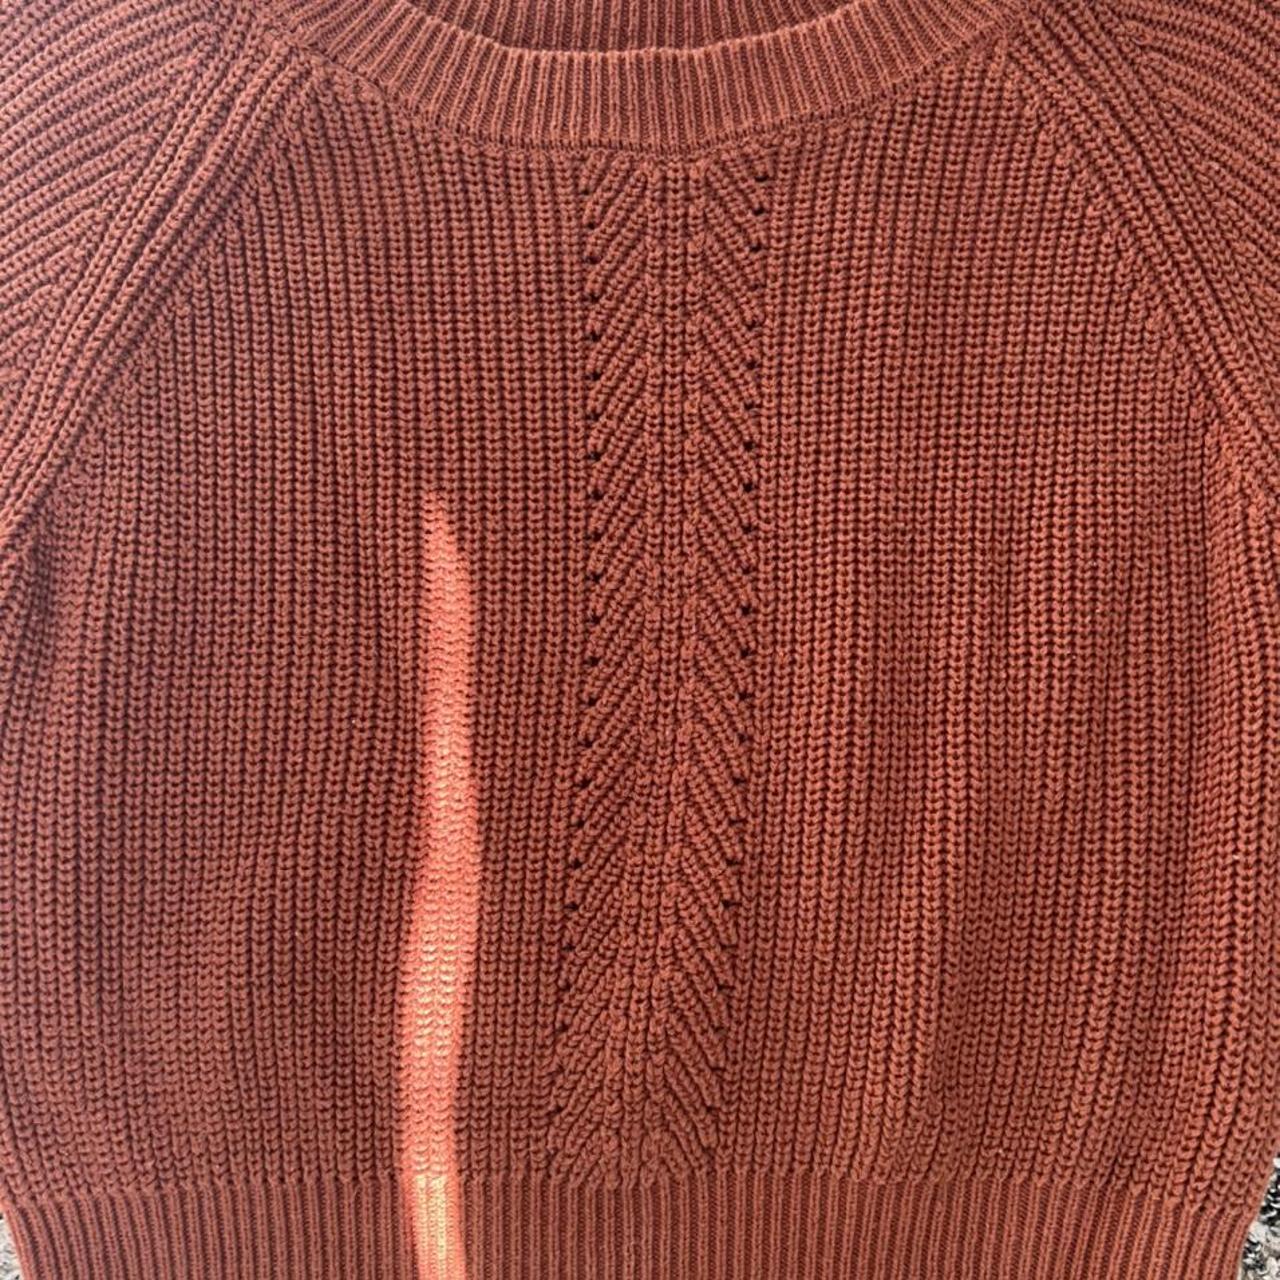 Forever 21 Women's Orange and Brown Sweatshirt (2)